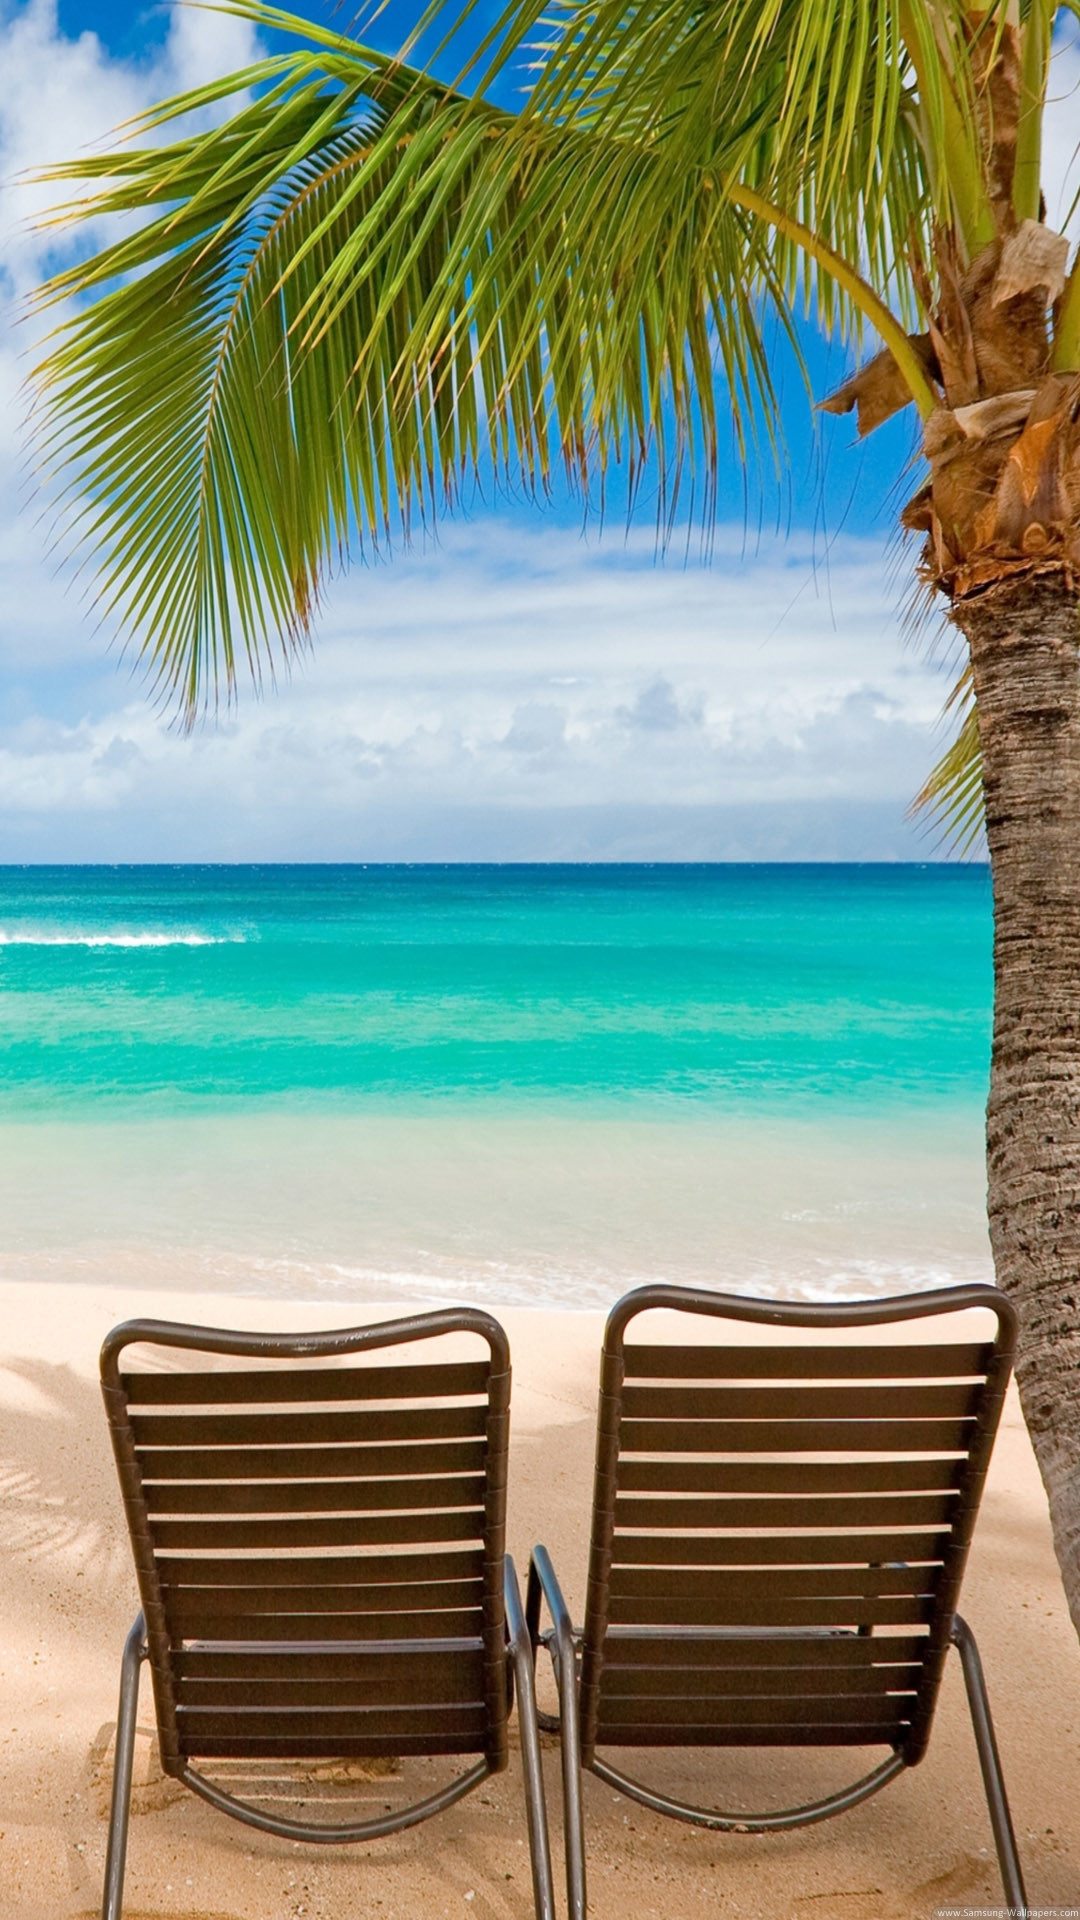 1080x1920 Tropical Beach Relaxation iPhone 6 Plus HD Wallpaper ...